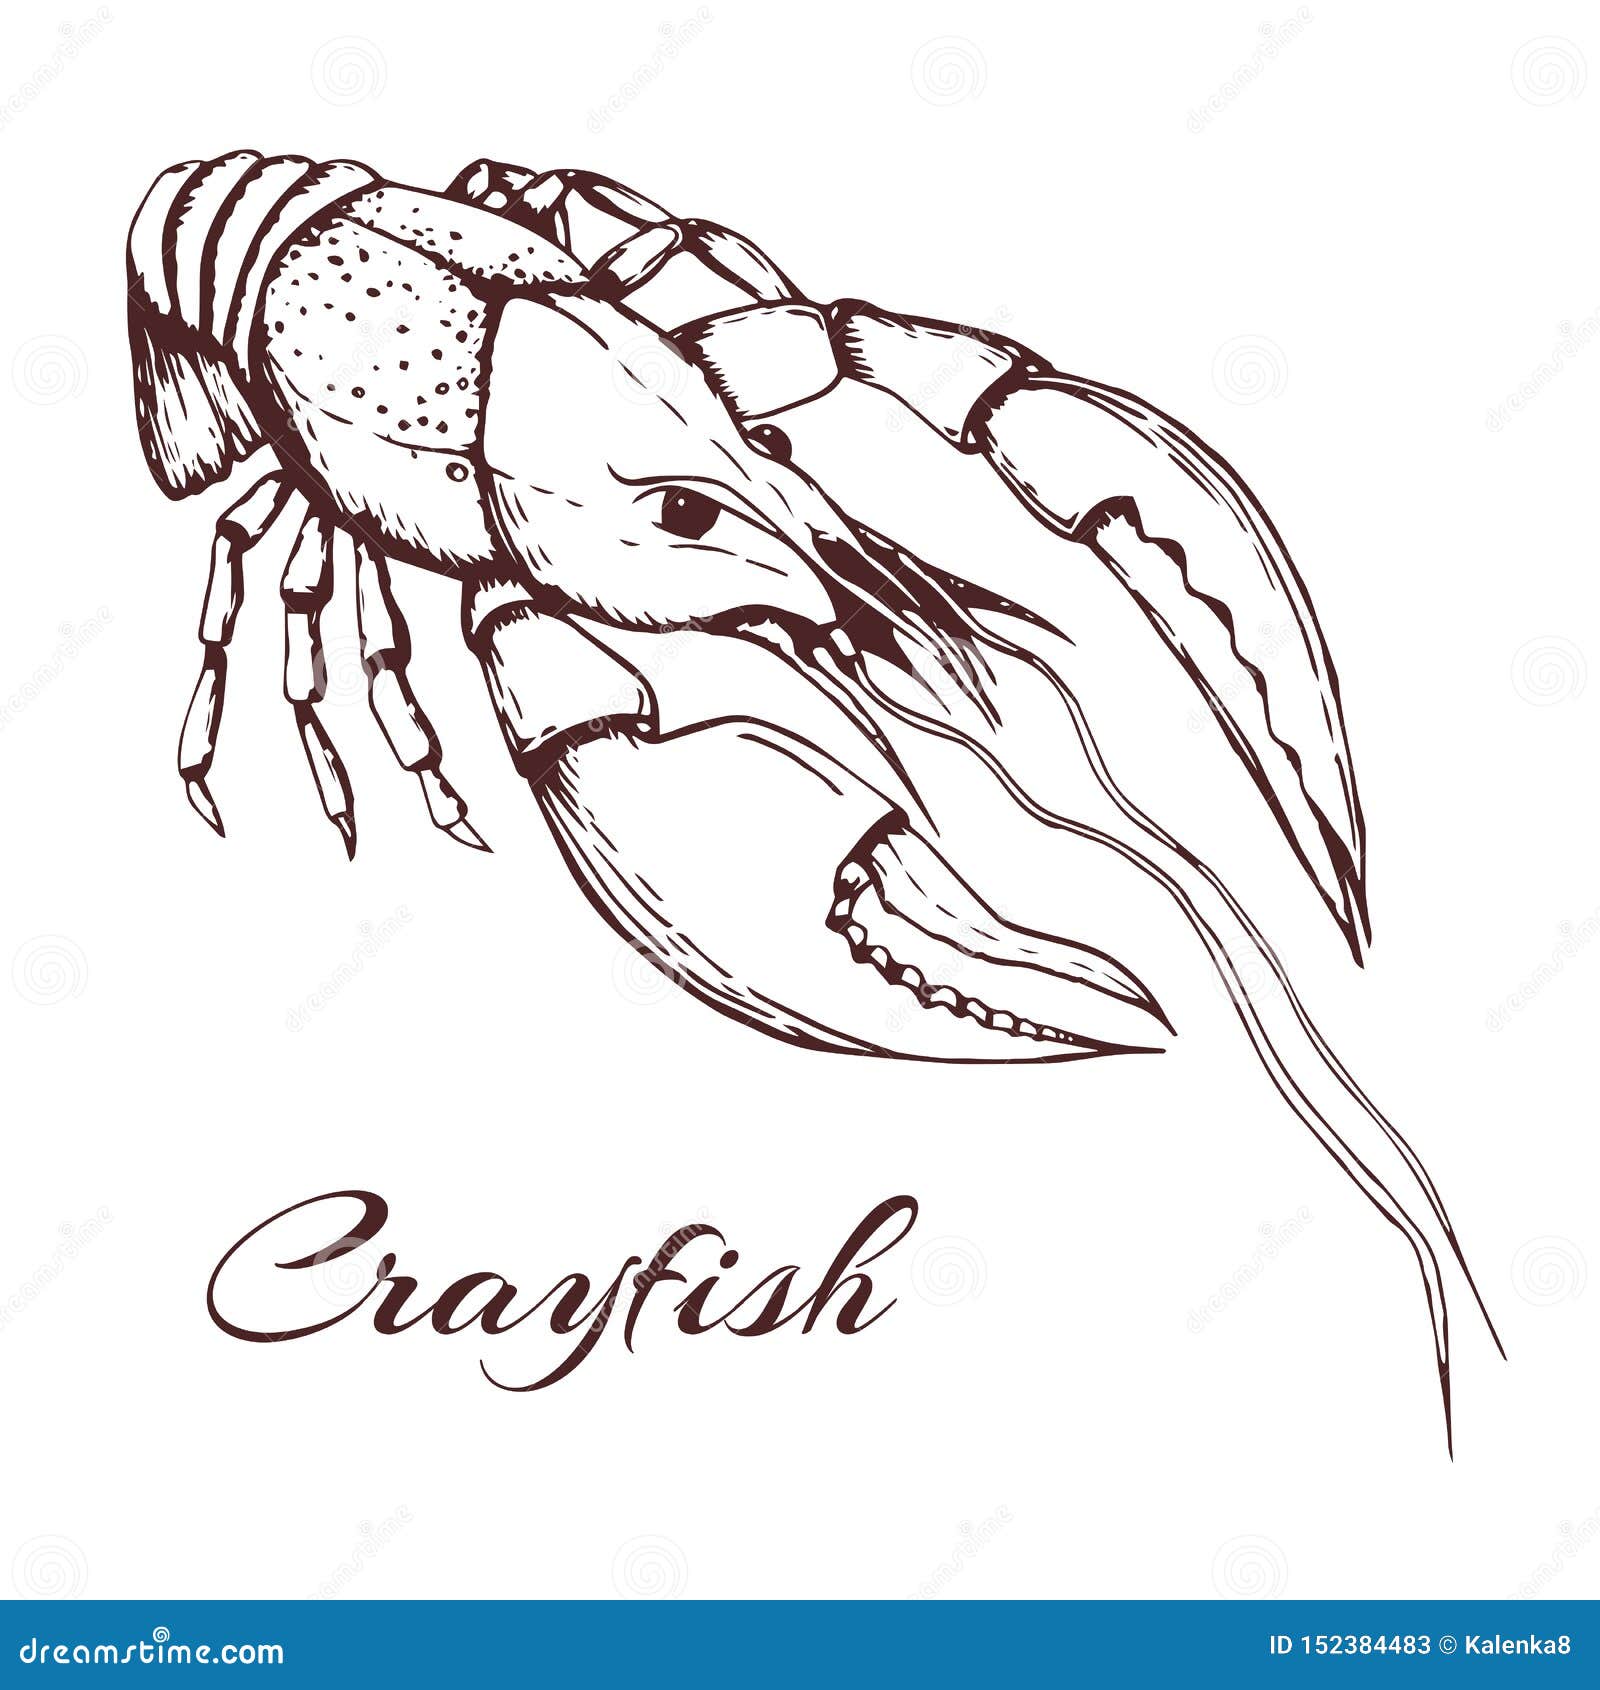 Hand Drawn Vintage Illustration of Crayfish on White Background